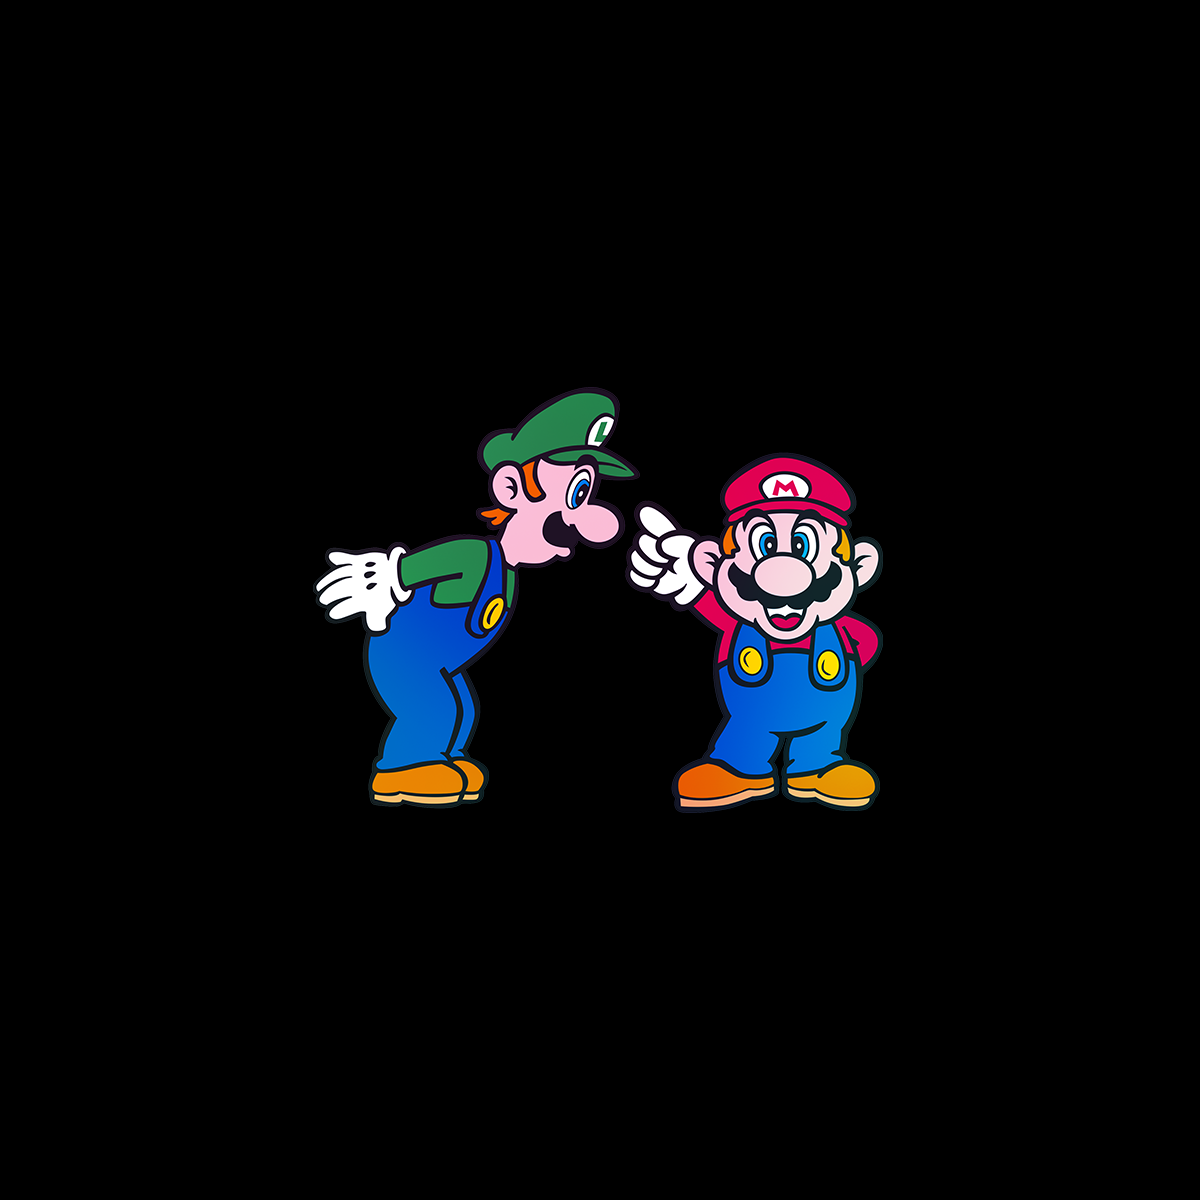 Luigi & Mario Super Mario Mens Retro OLD SKOOL Fast Delivery Unisex Tank Top - Kuzi Tees